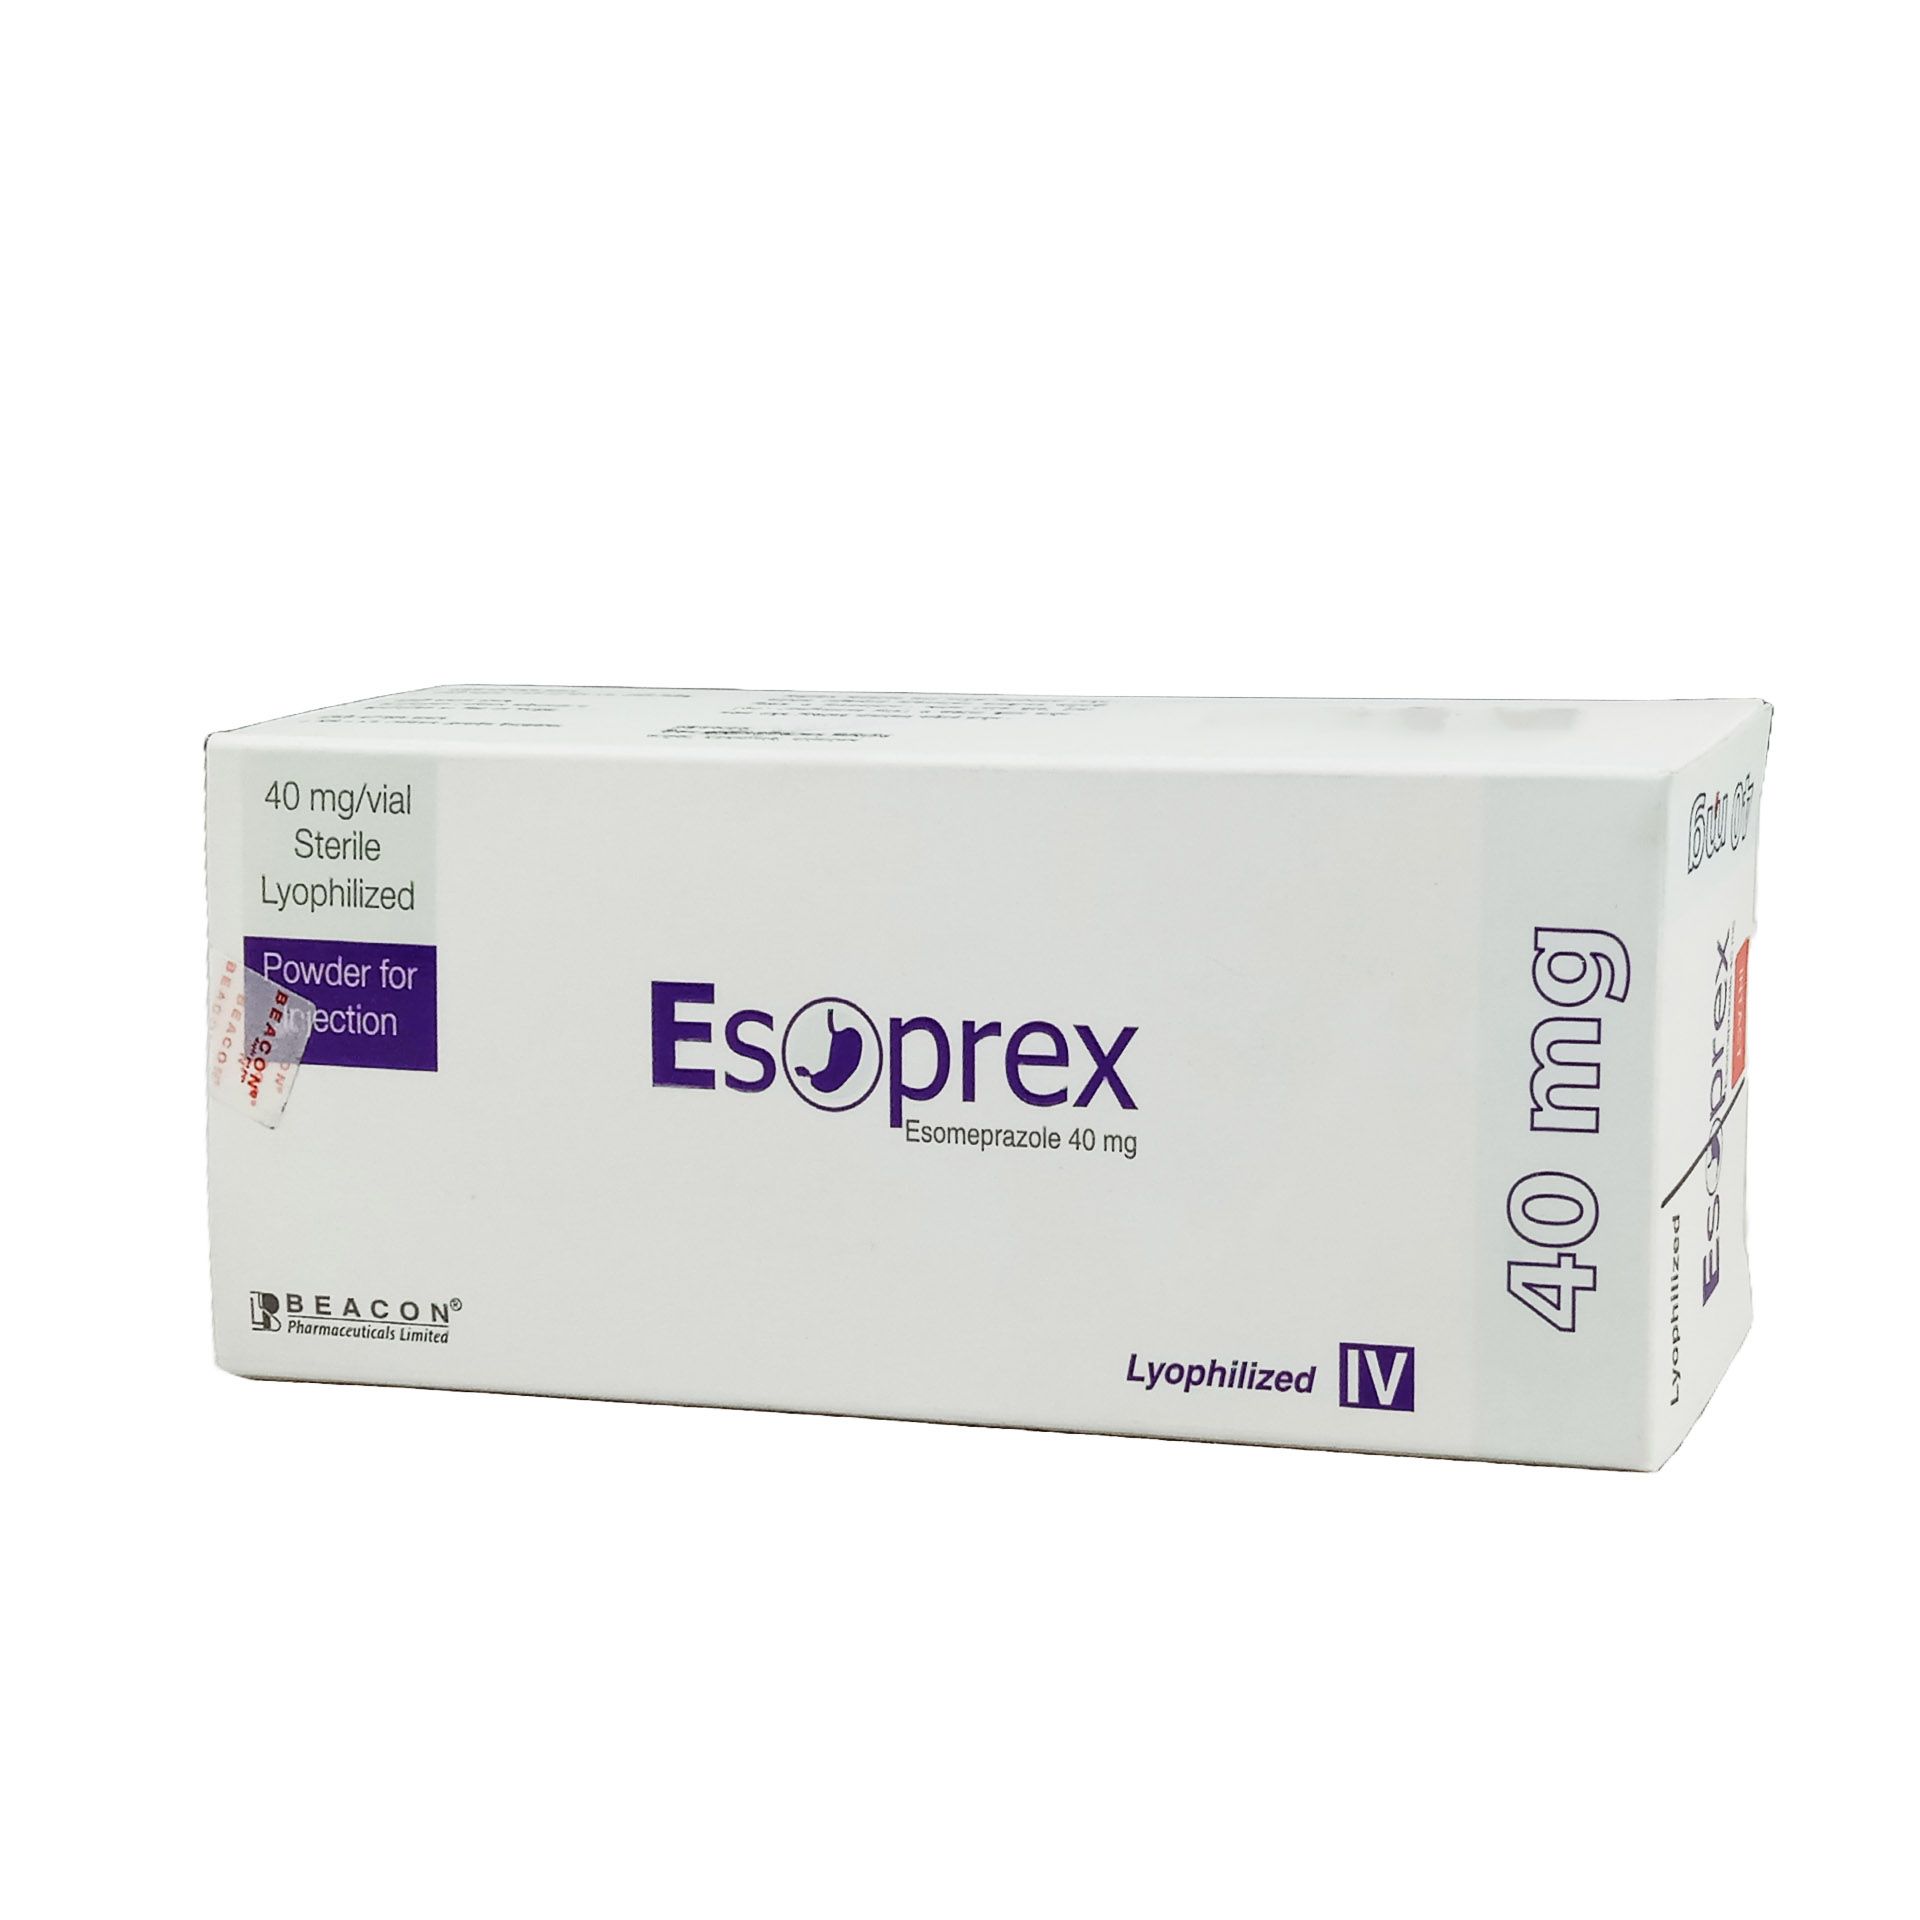 Esoprex 40mg/vial Injection